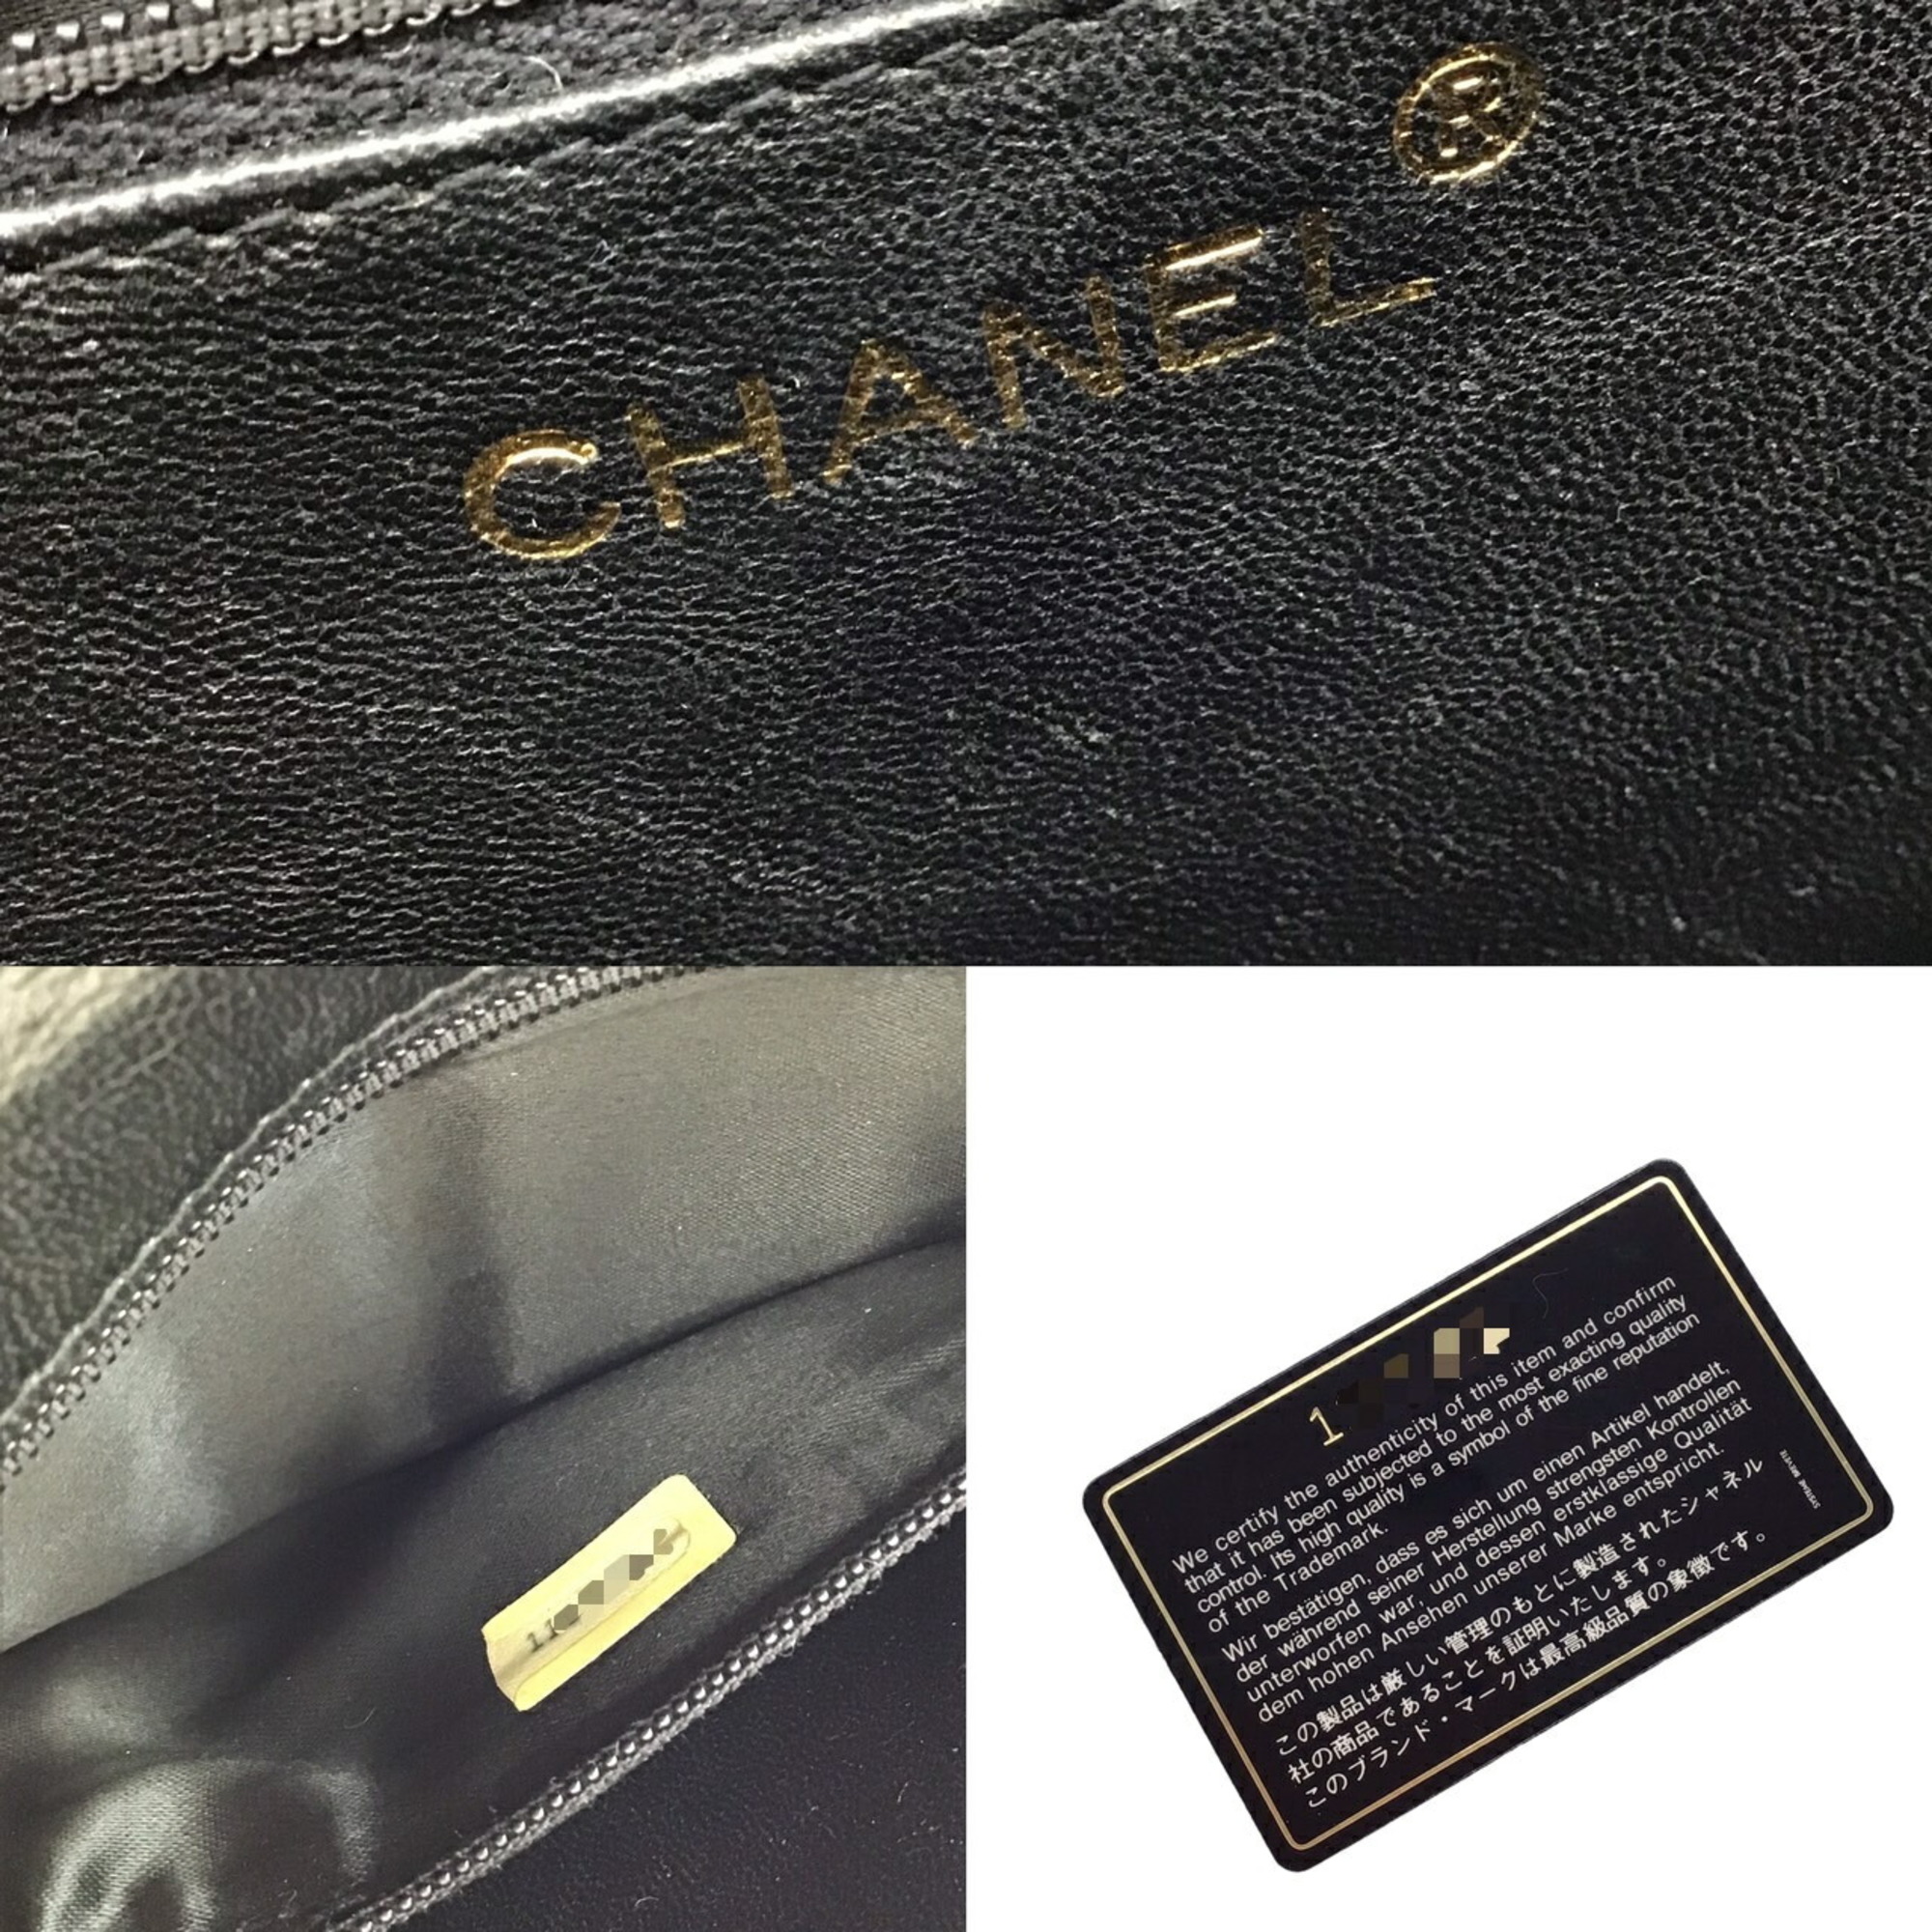 CHANEL Chanel Coco Mark Matelasse Chain Shoulder Bag Handbag Compact Box Single Women's